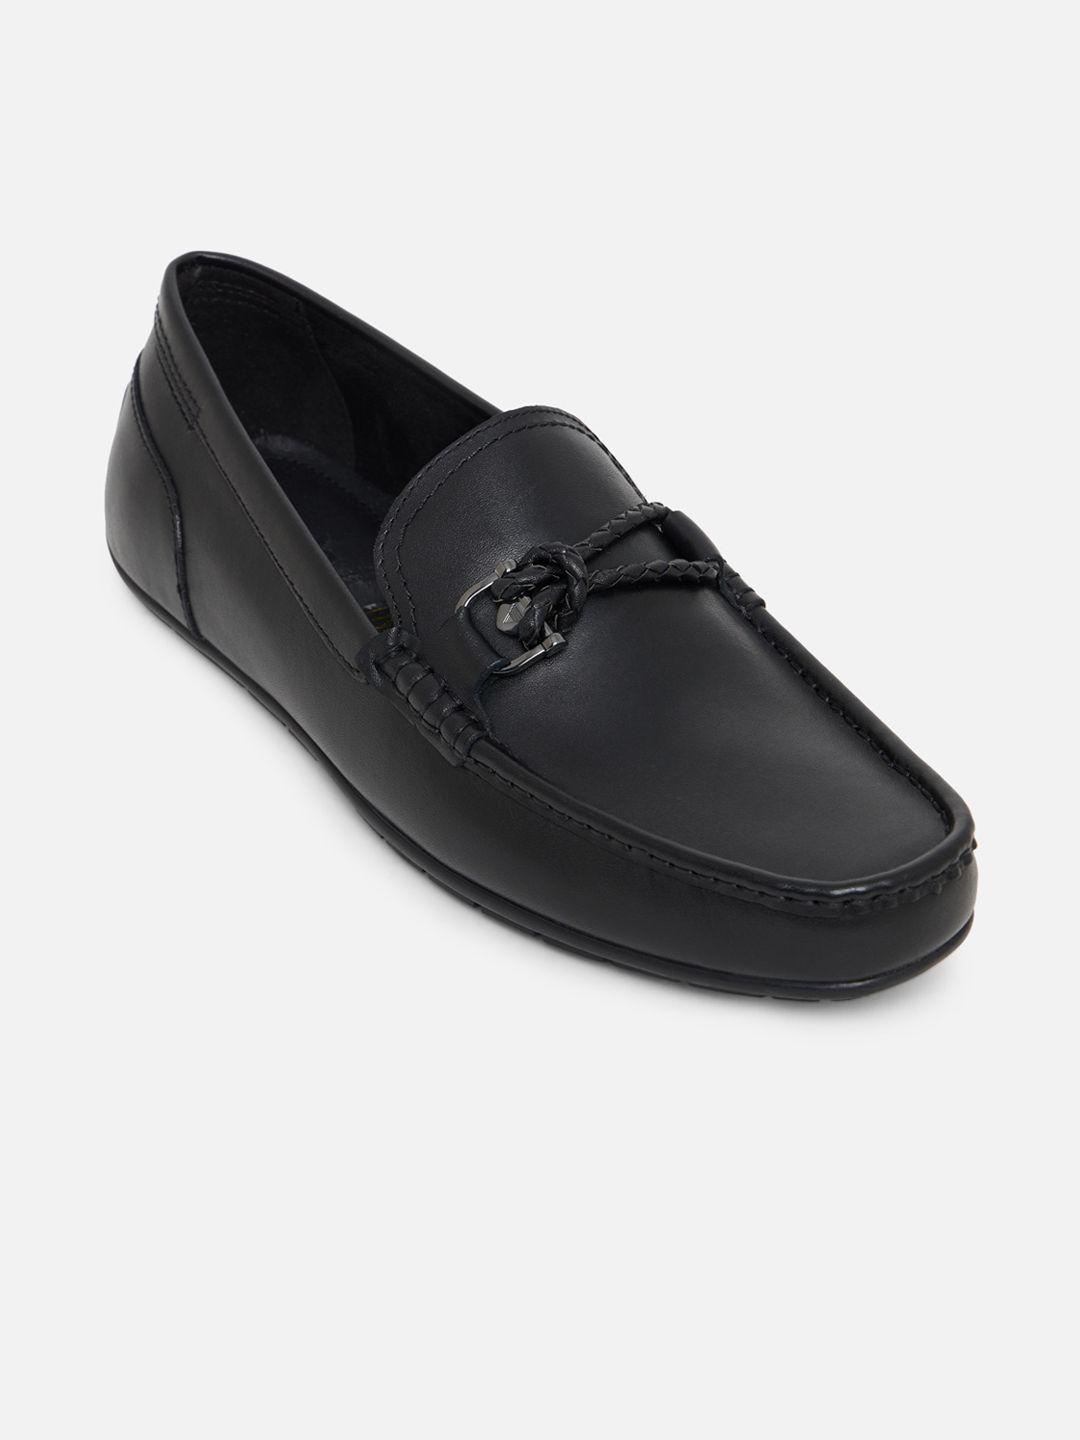 ALDO Men Black Leather Loafers